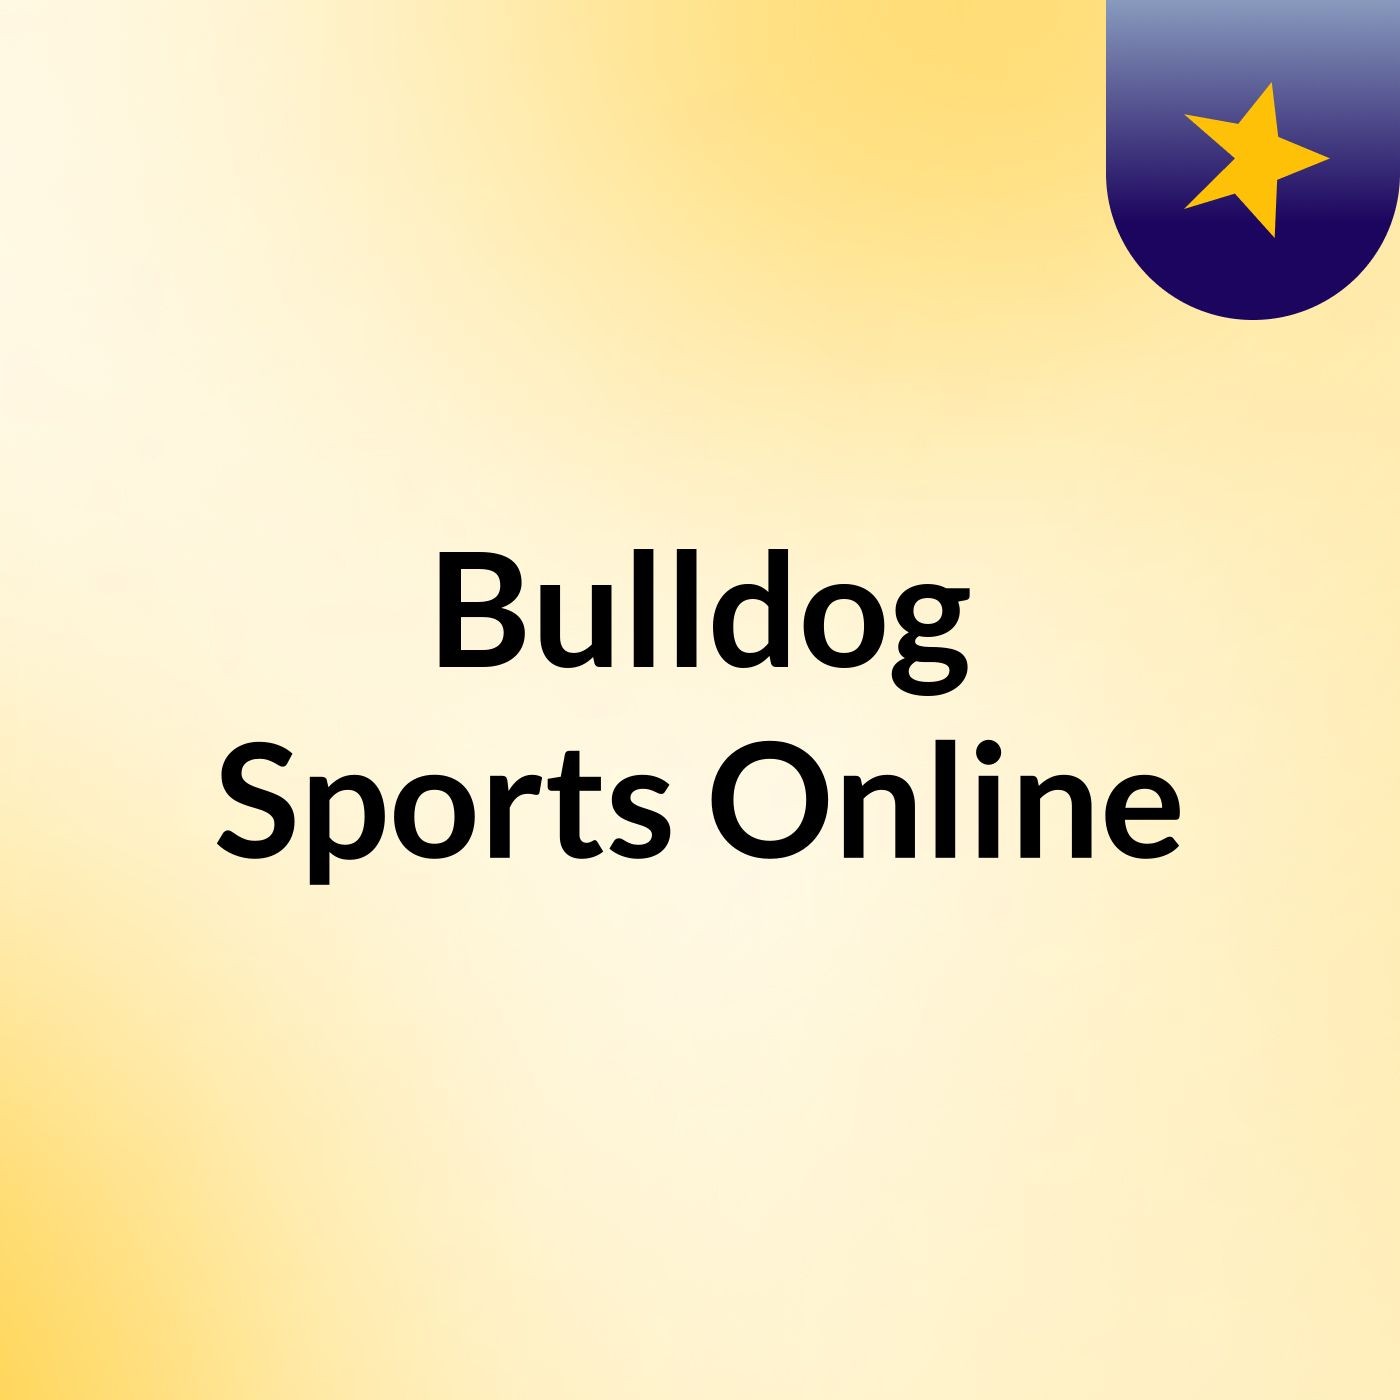 Bulldog Sports Online